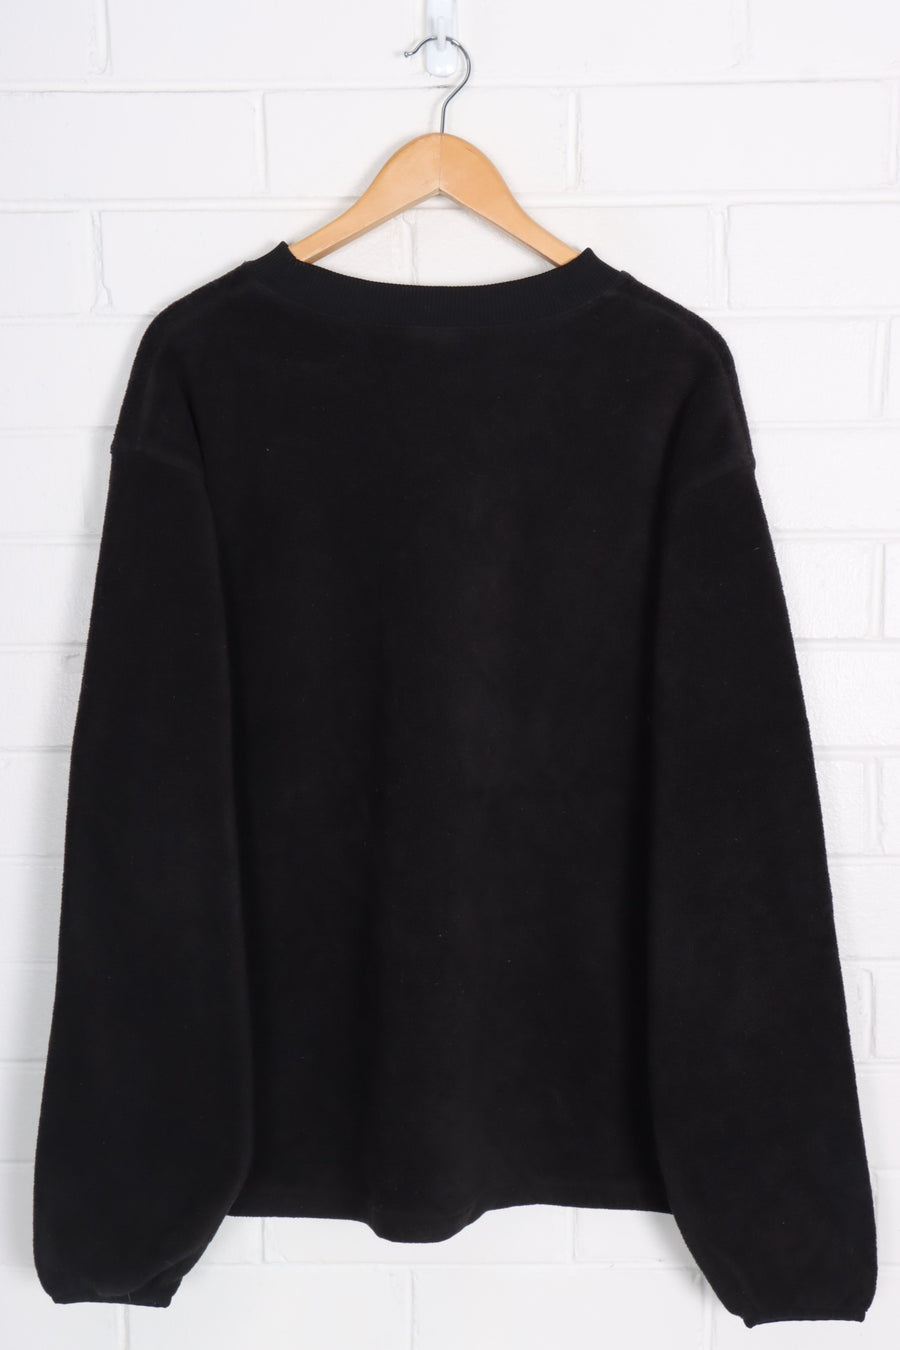 ADIDAS Black & White Embroidered Fleece Sweatshirt (XL)